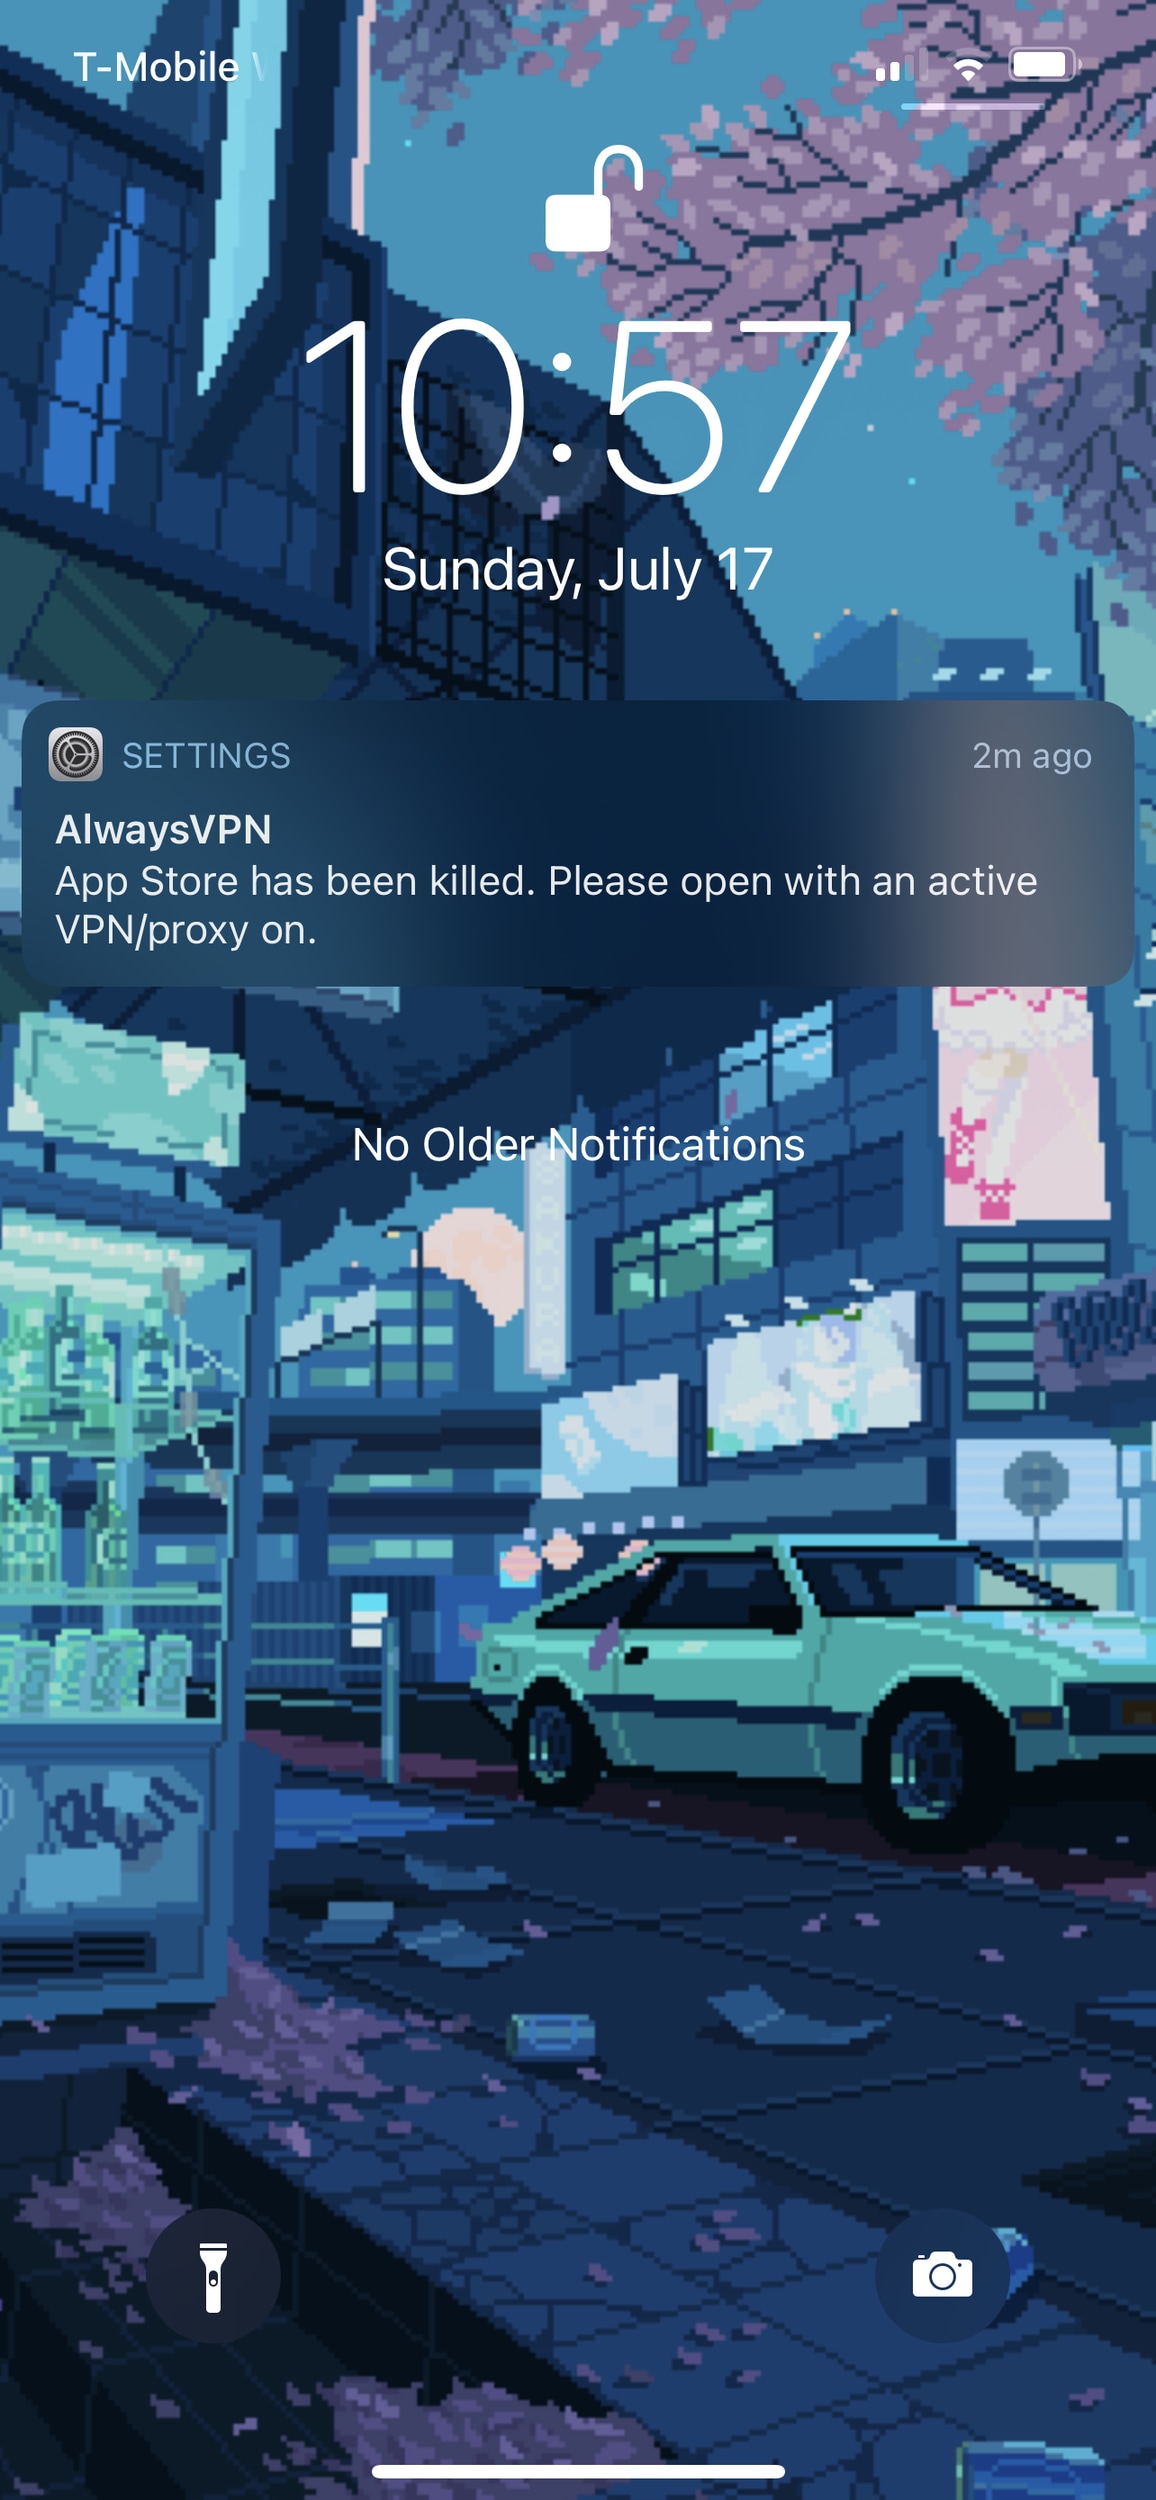 Lock Screen view of notification